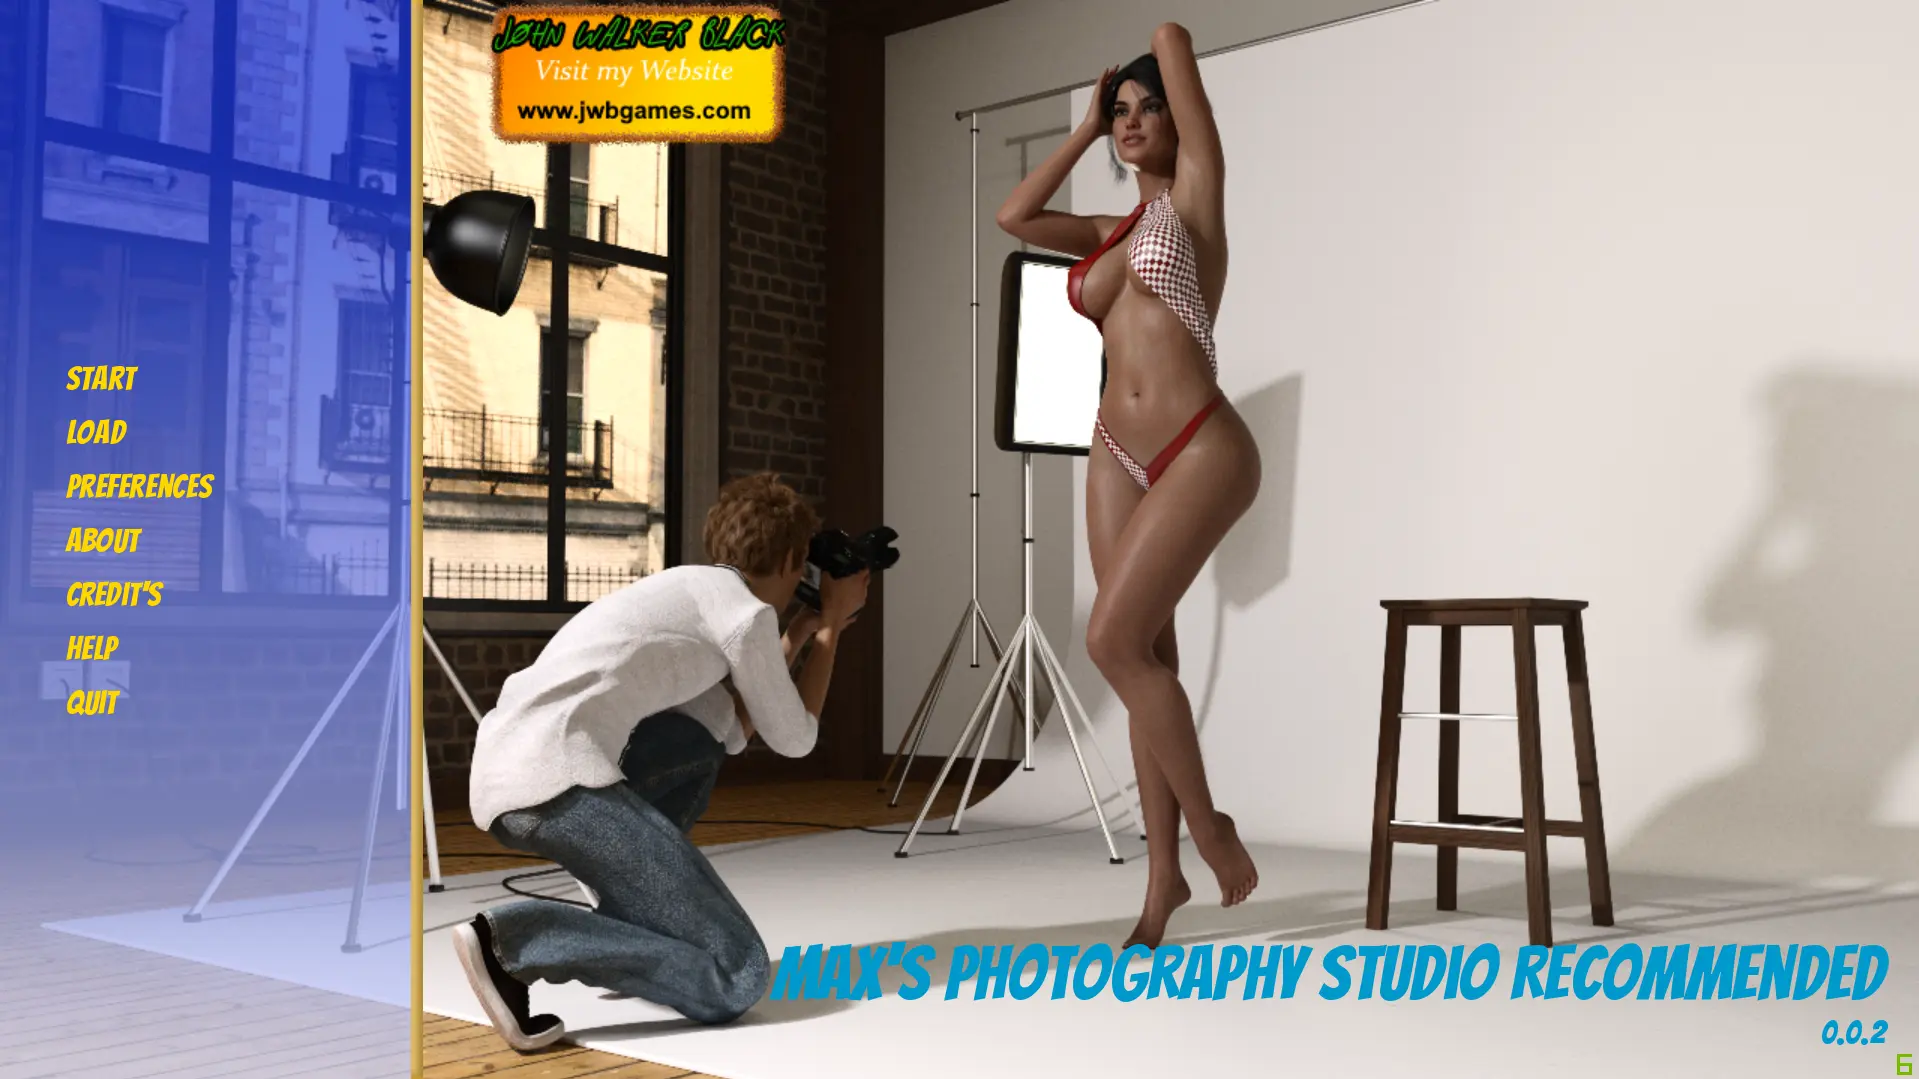 Max's Photography Studio [v0.0.2 Alpha] main image